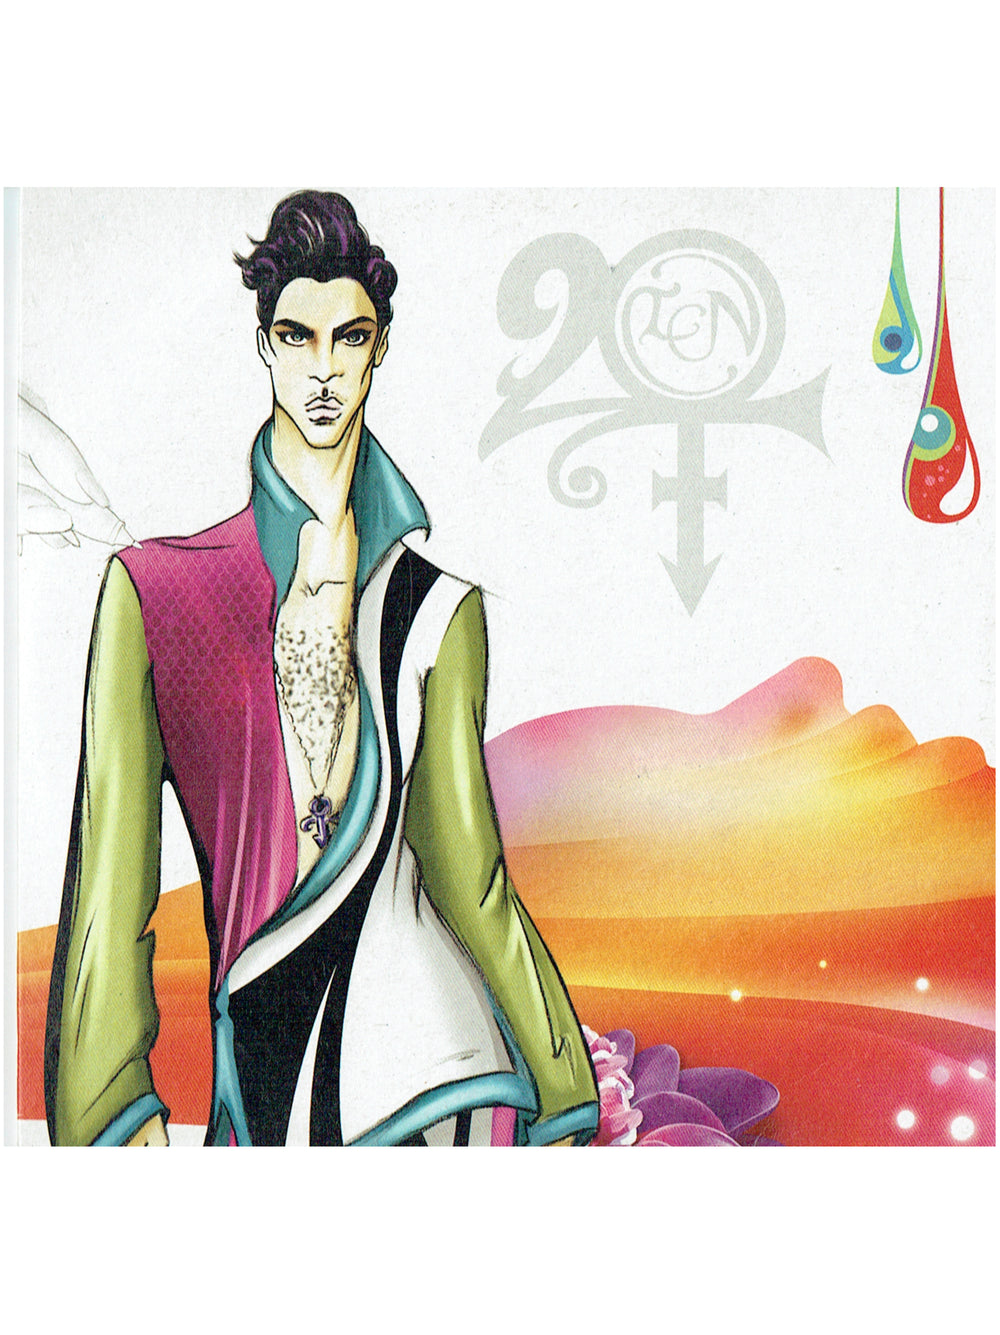 Prince 20TEN Compact Disc CD Album 2010 Original Card Slip Case INC LAYDOWN